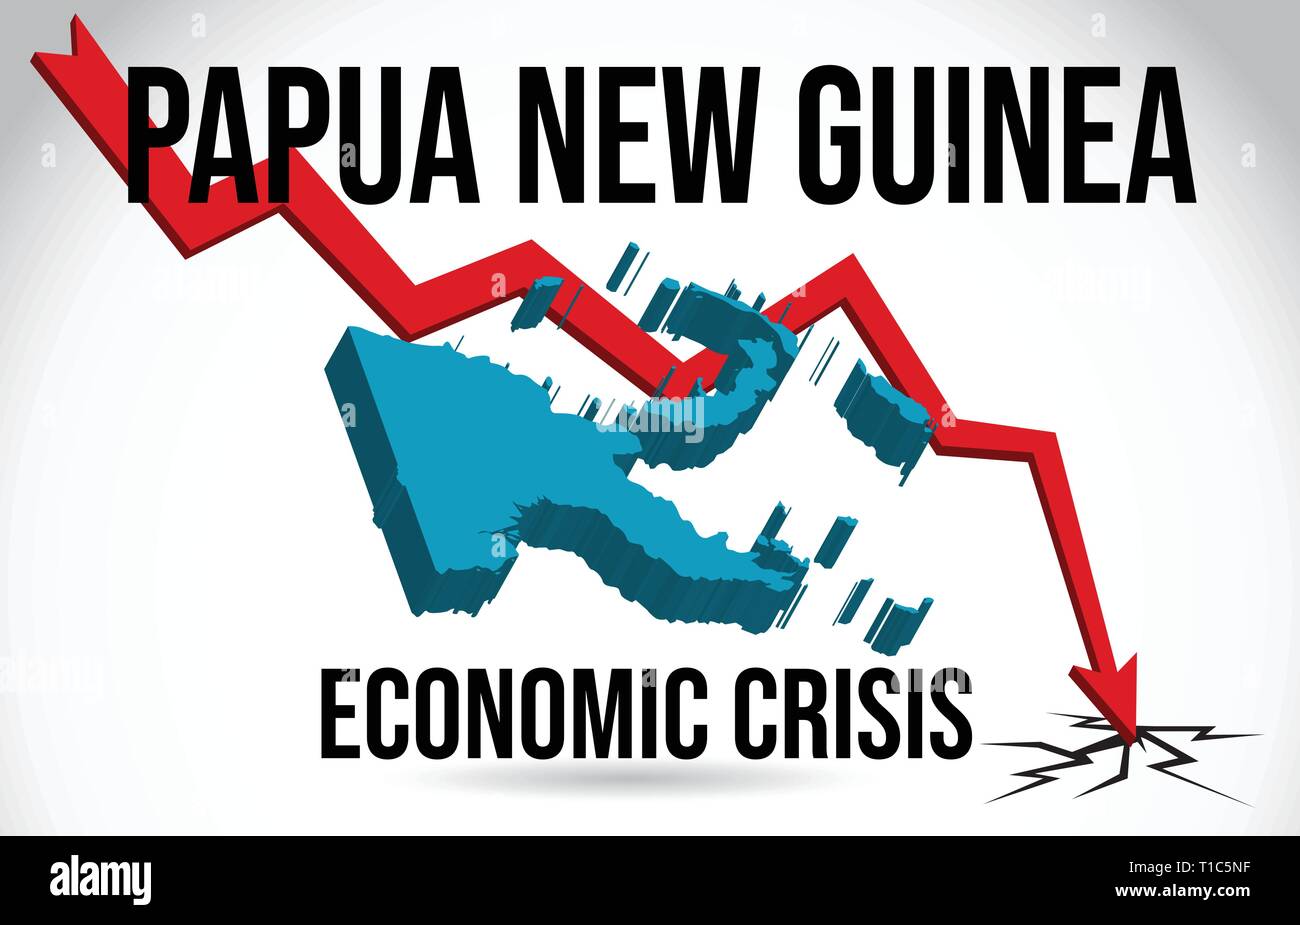 Papua New Guinea Map Financial Crisis Economic Collapse Market Crash Global Meltdown Vector Illustration. Stock Vector